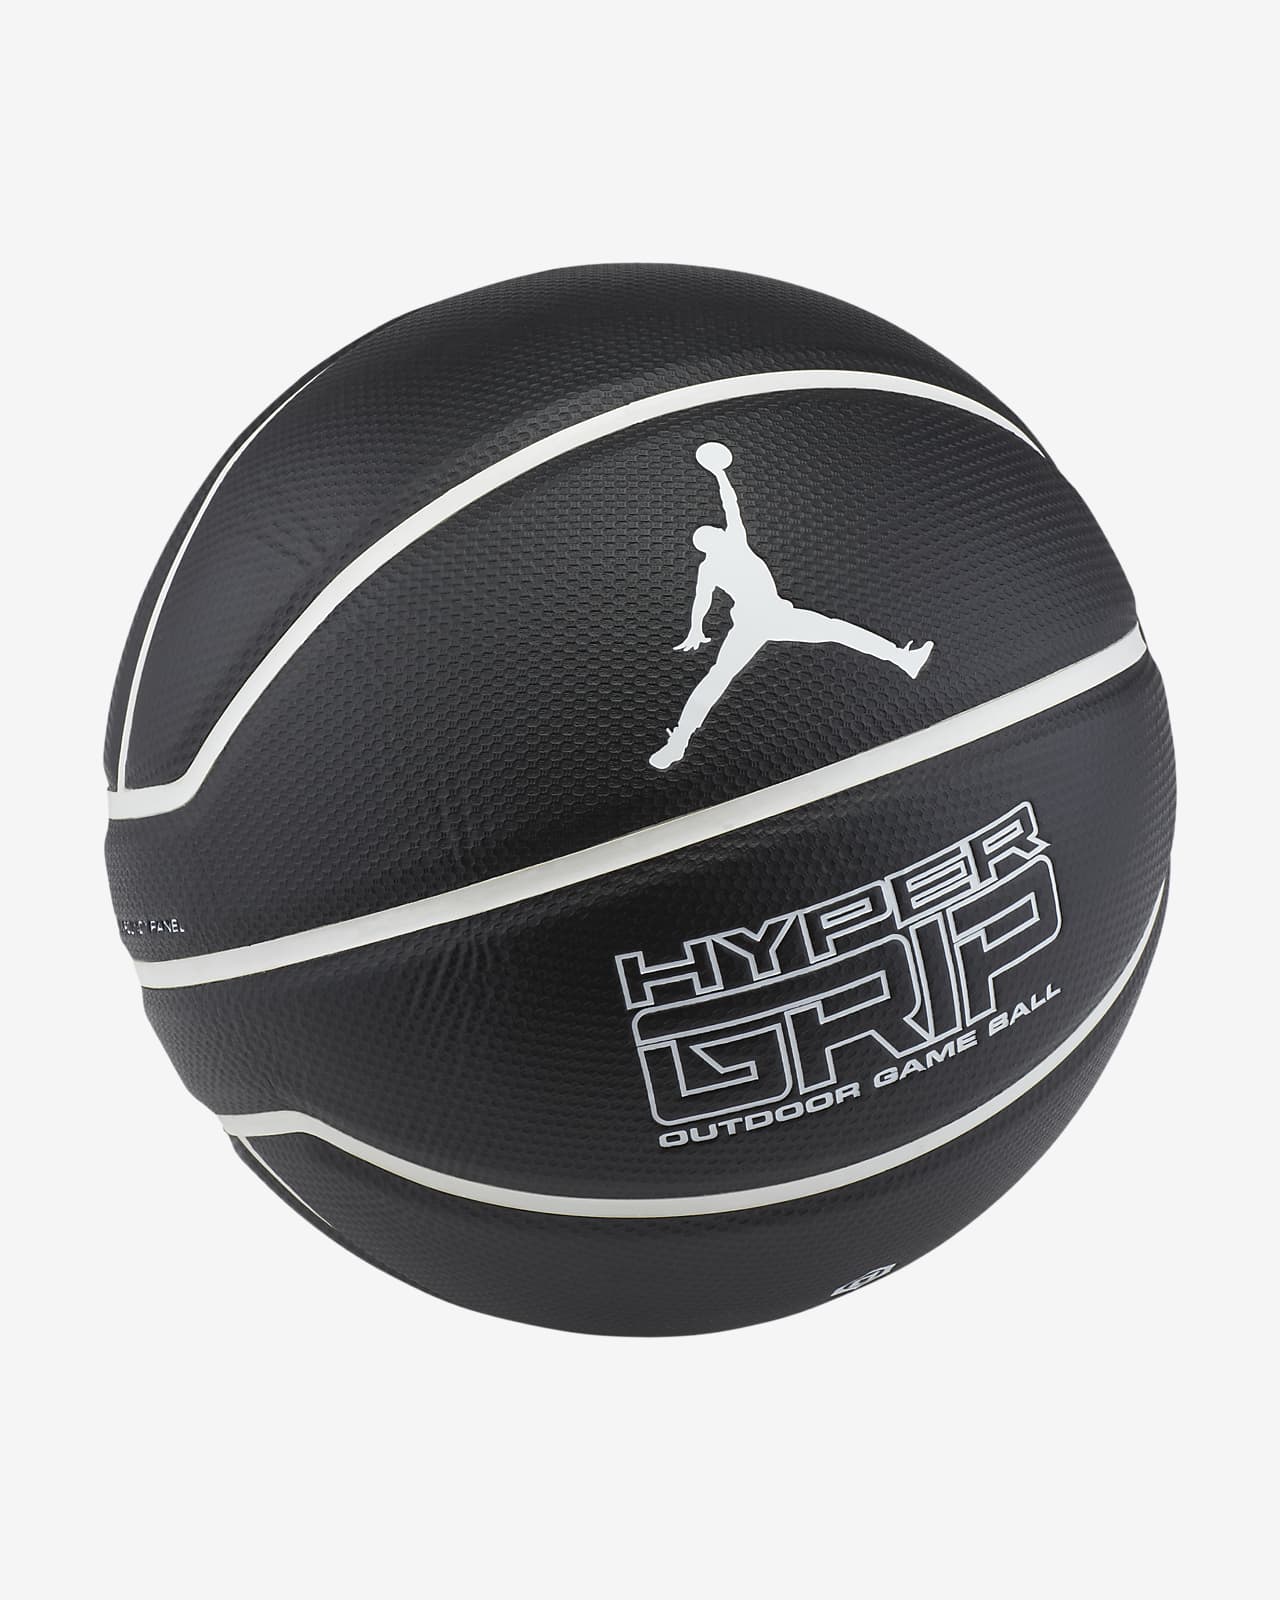 hypergrip basketball